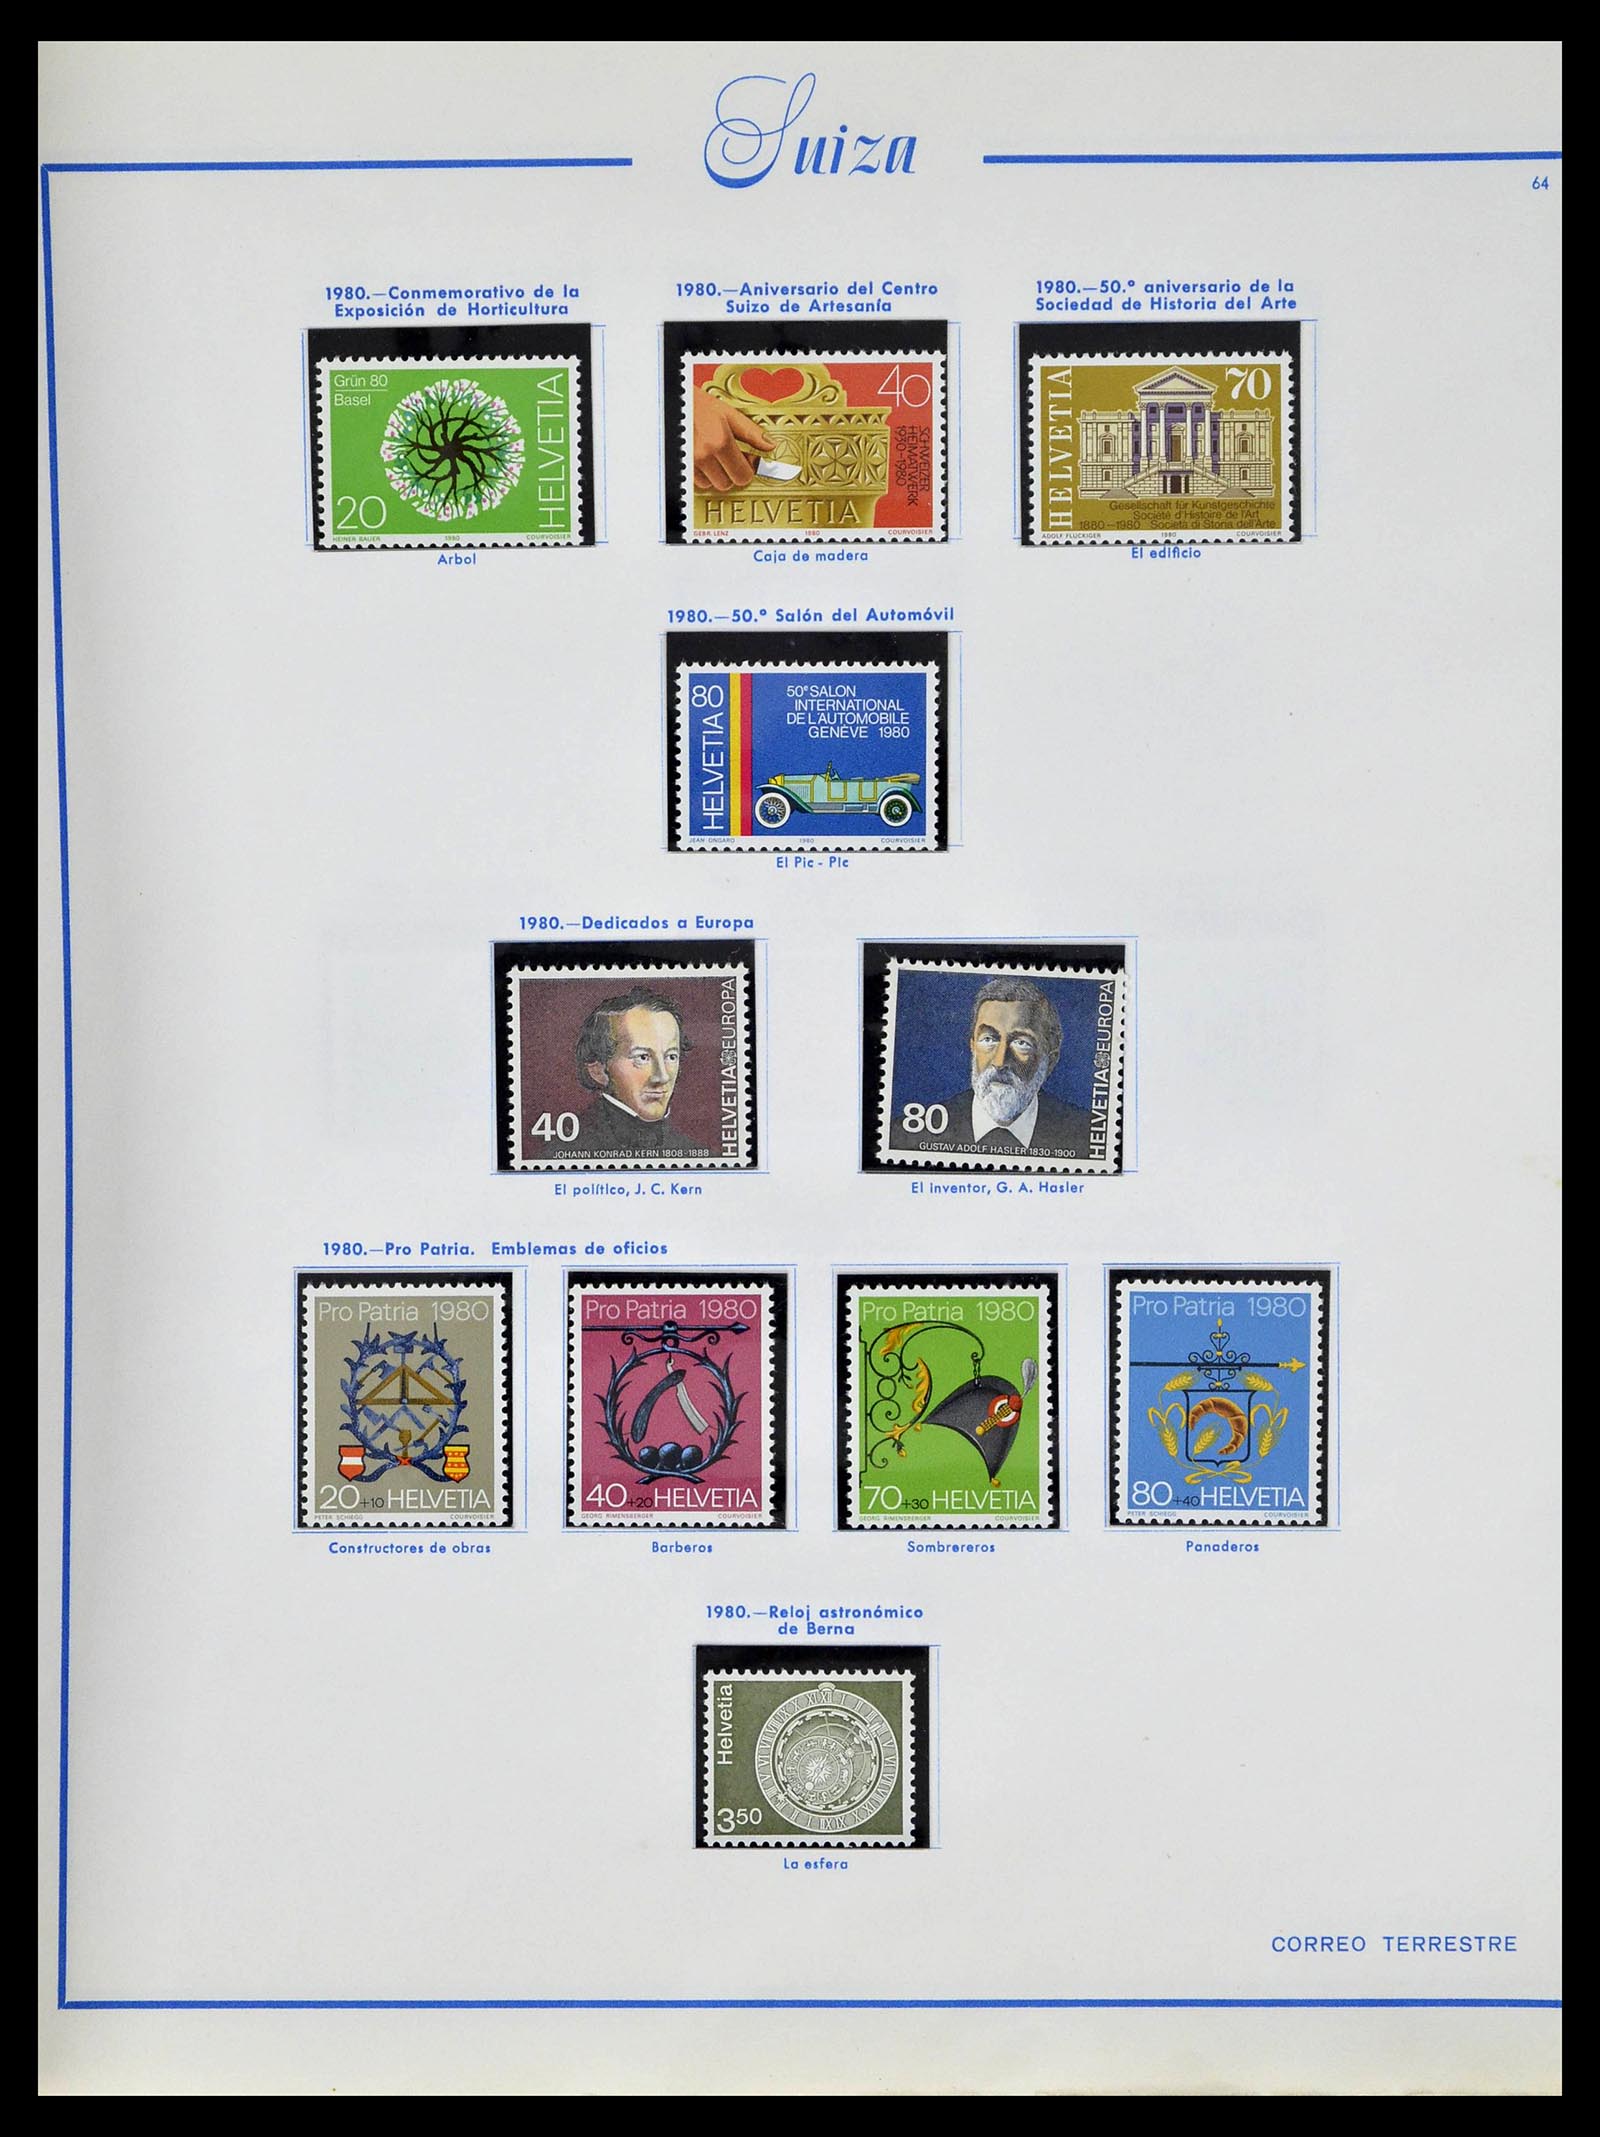 39217 0071 - Stamp collection 39217 Switzerland 1850-1986.